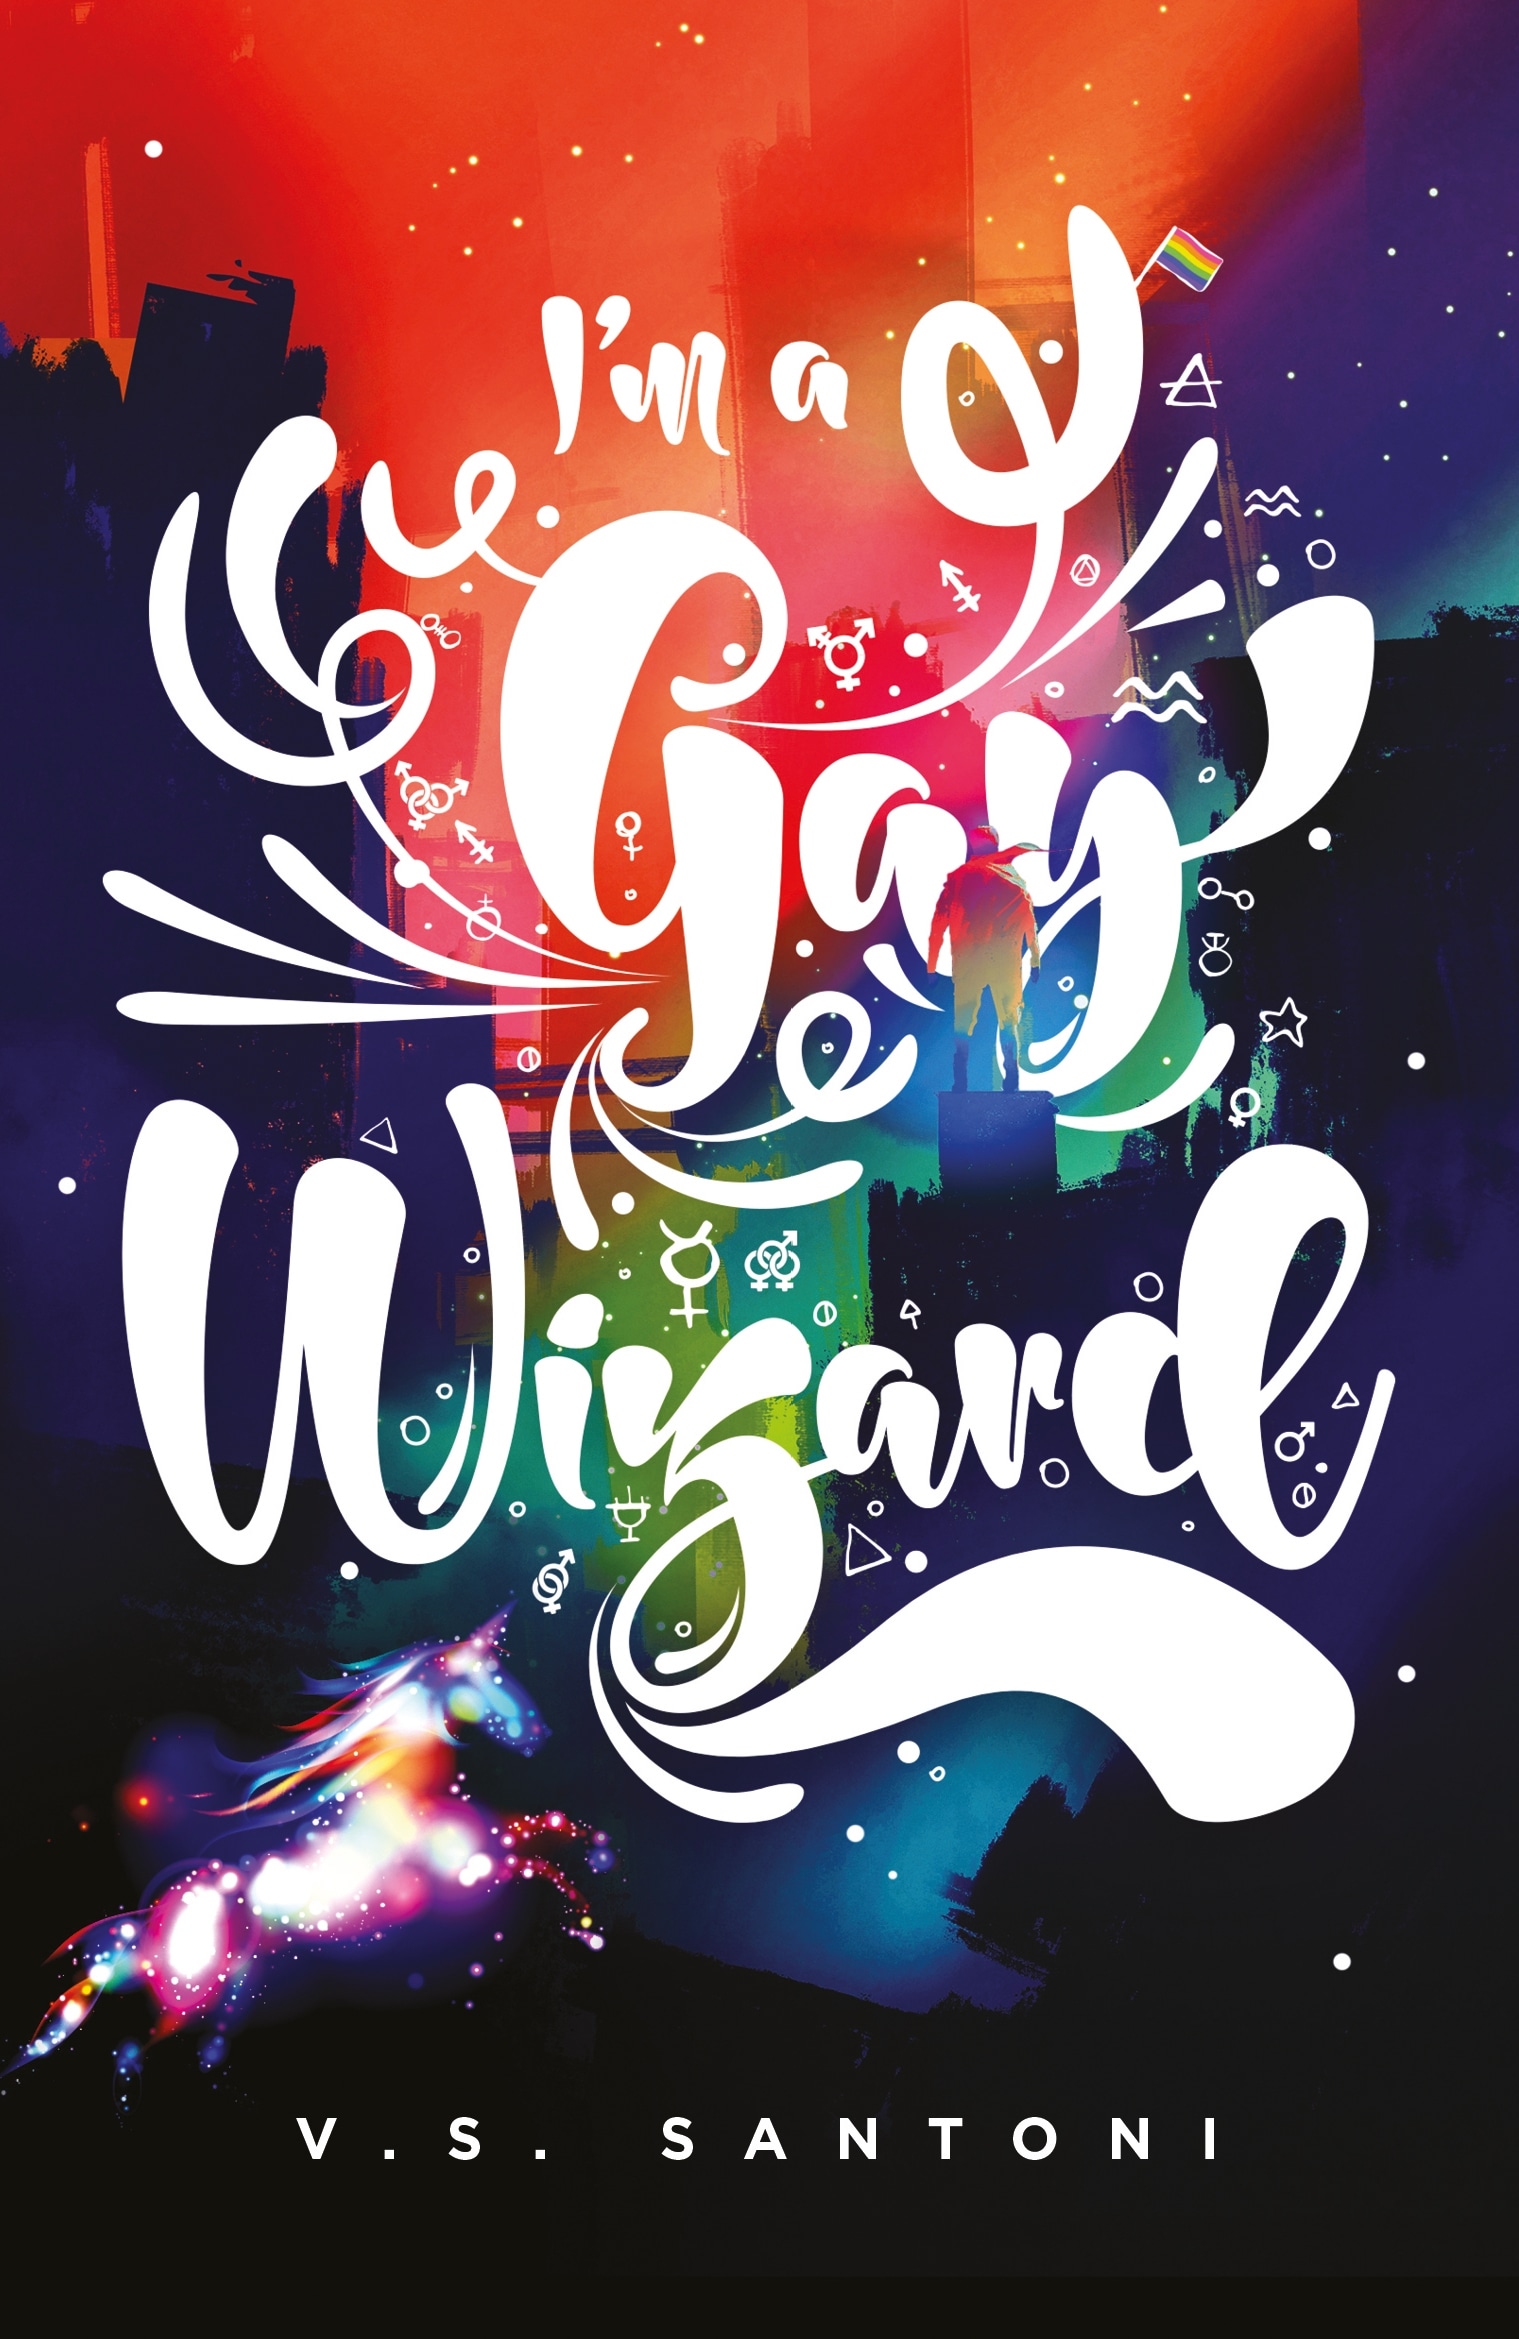 Book “I'm a Gay Wizard” by V. S. Santoni — October 31, 2019